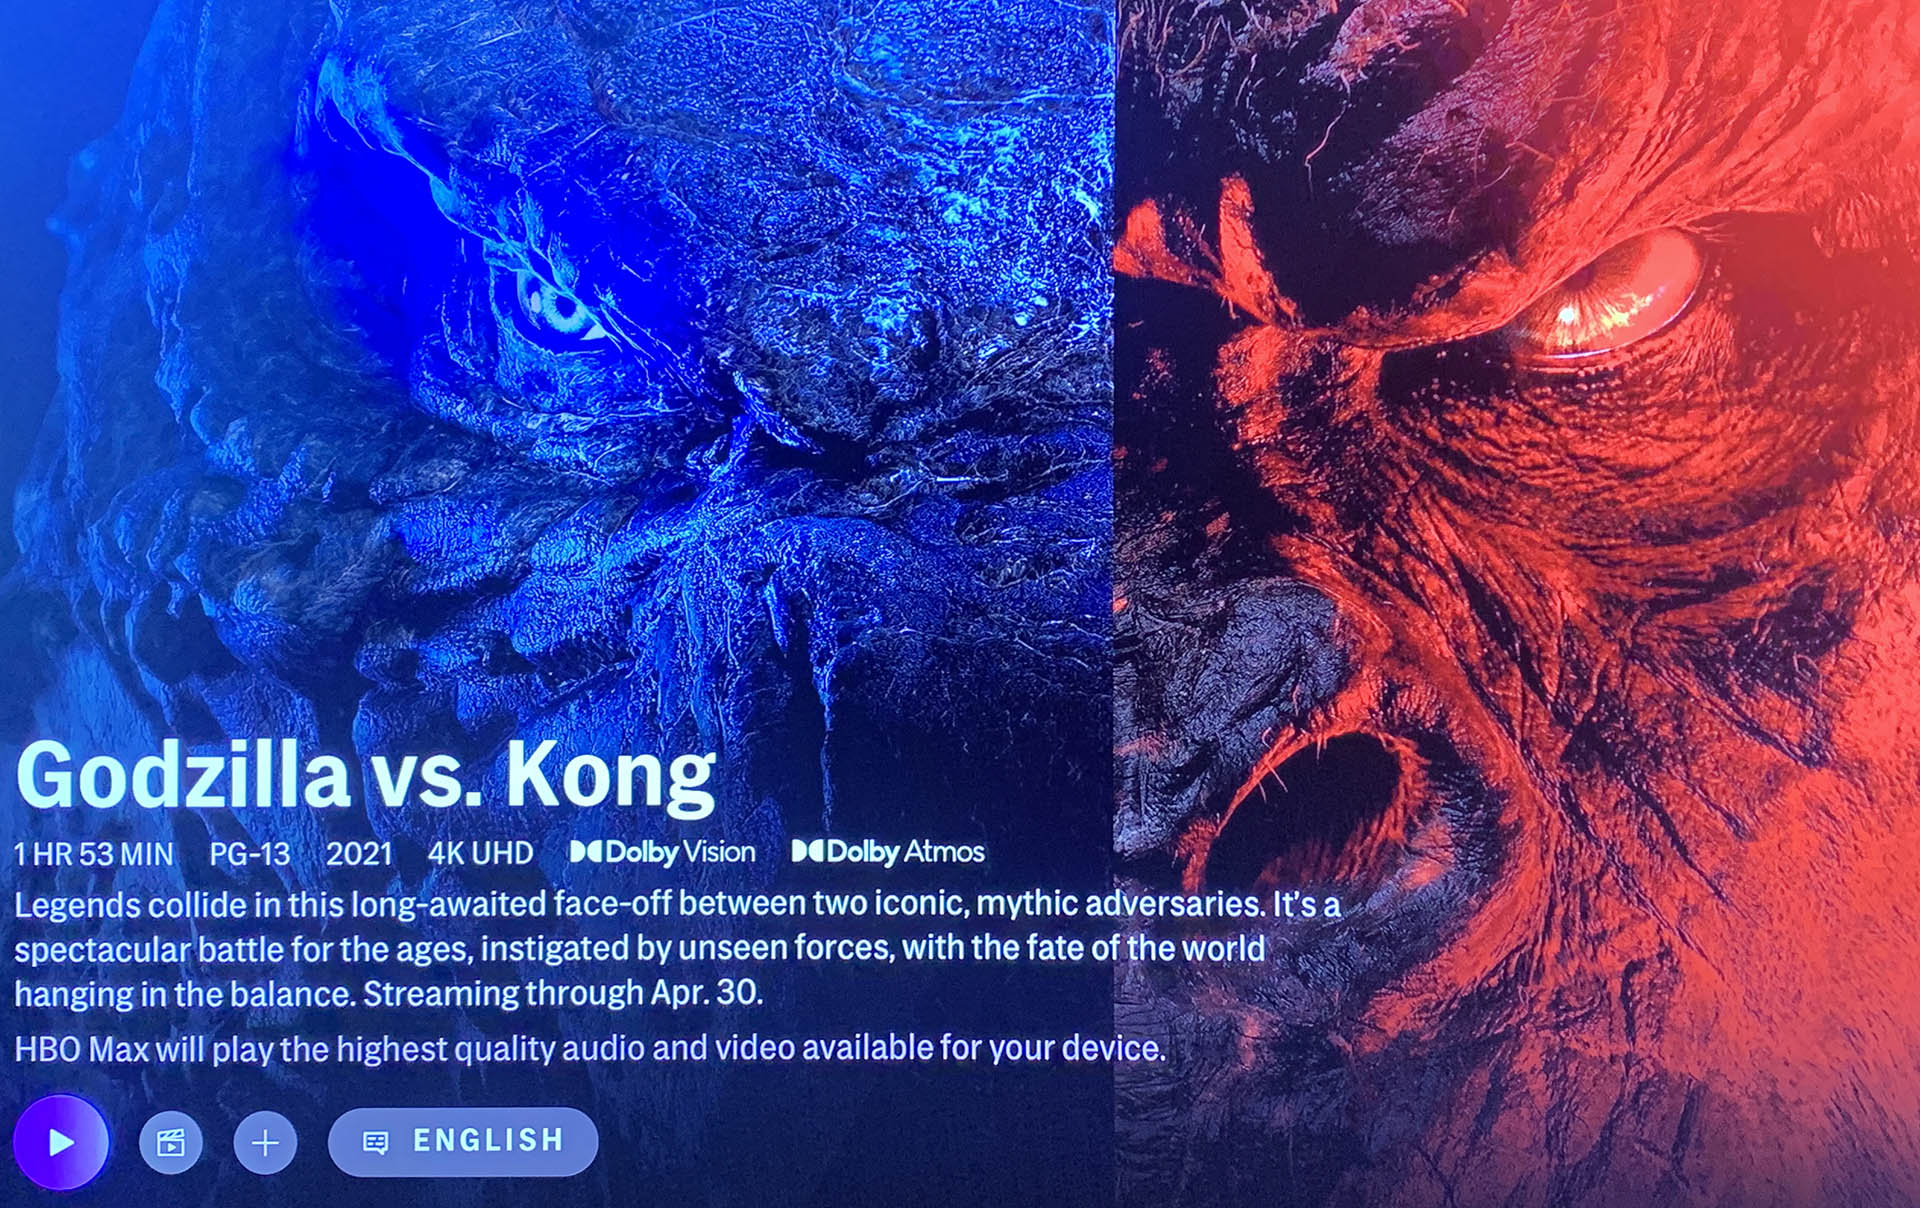 Godzilla vs. Kong HBO Max title